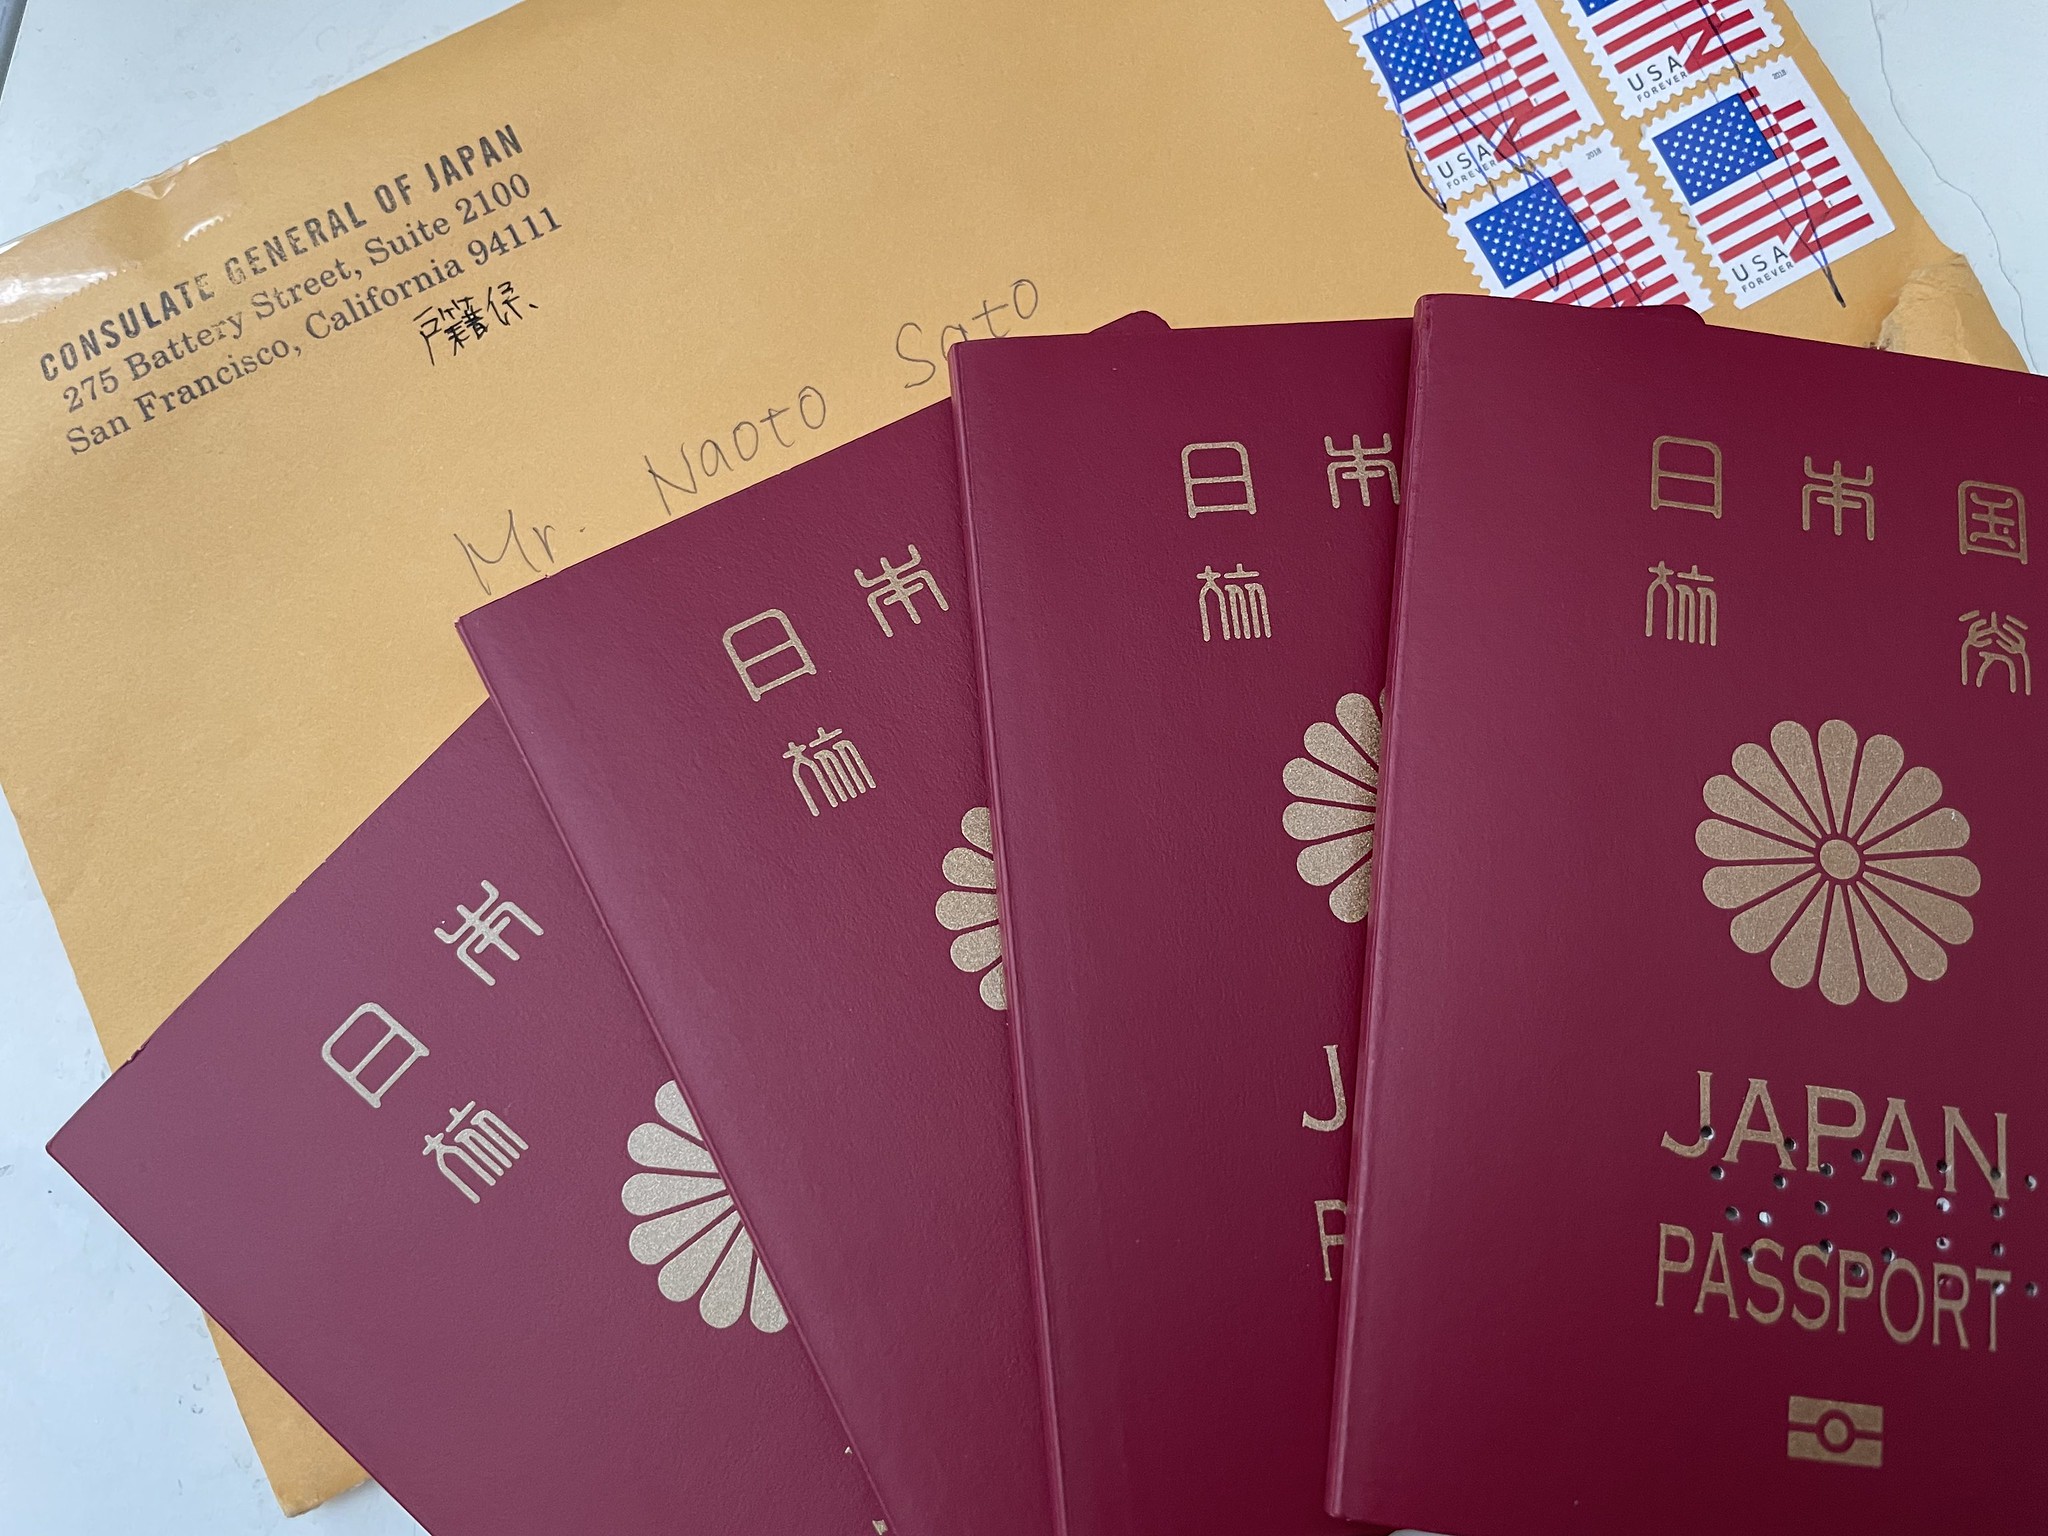 4 Japanese Passports - Voided